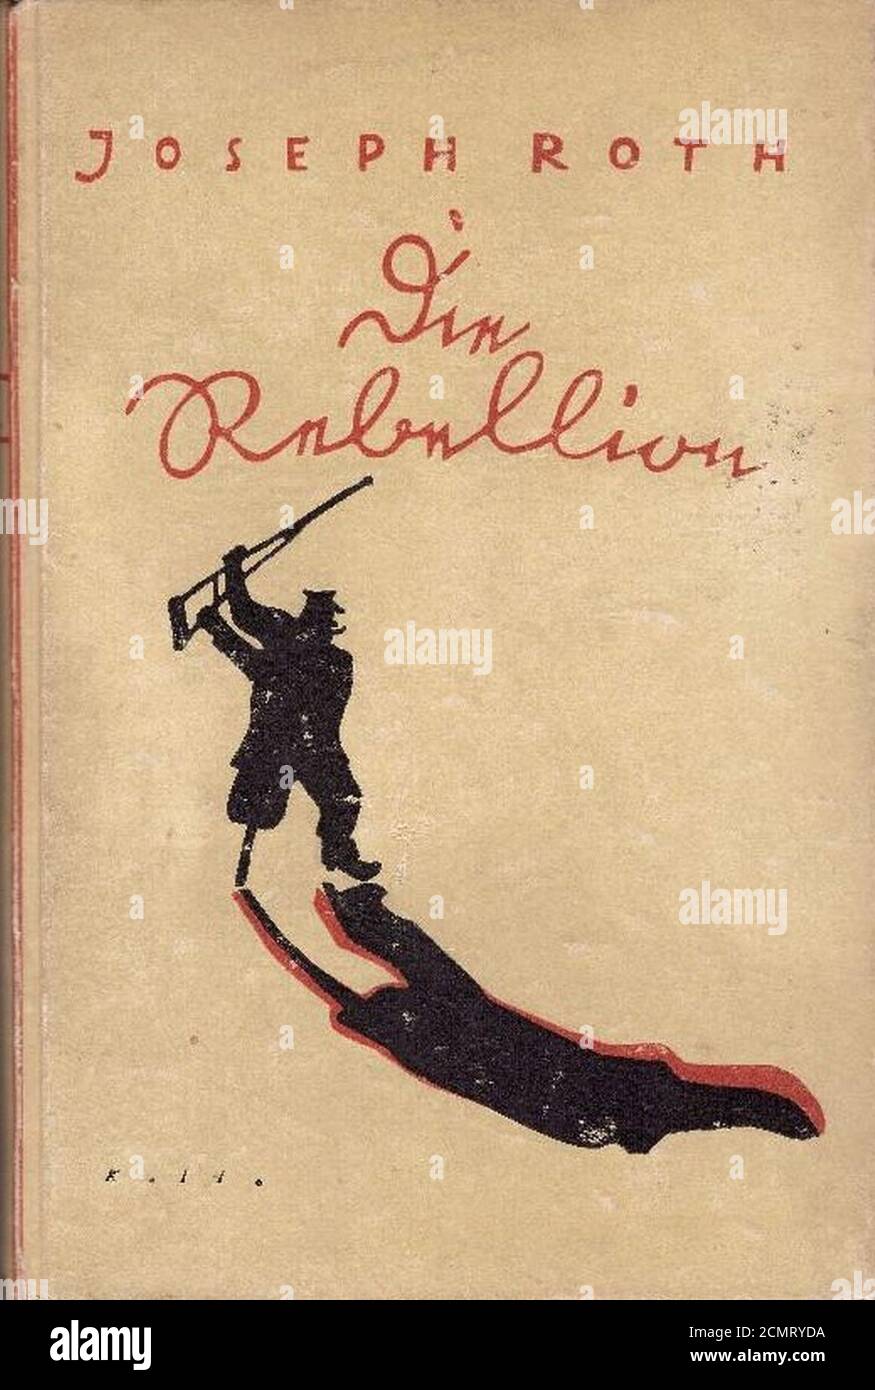 Joseph Roth - Die Rebellion, Verlag Die Schmiede, Berlin,1924. Stock Photo